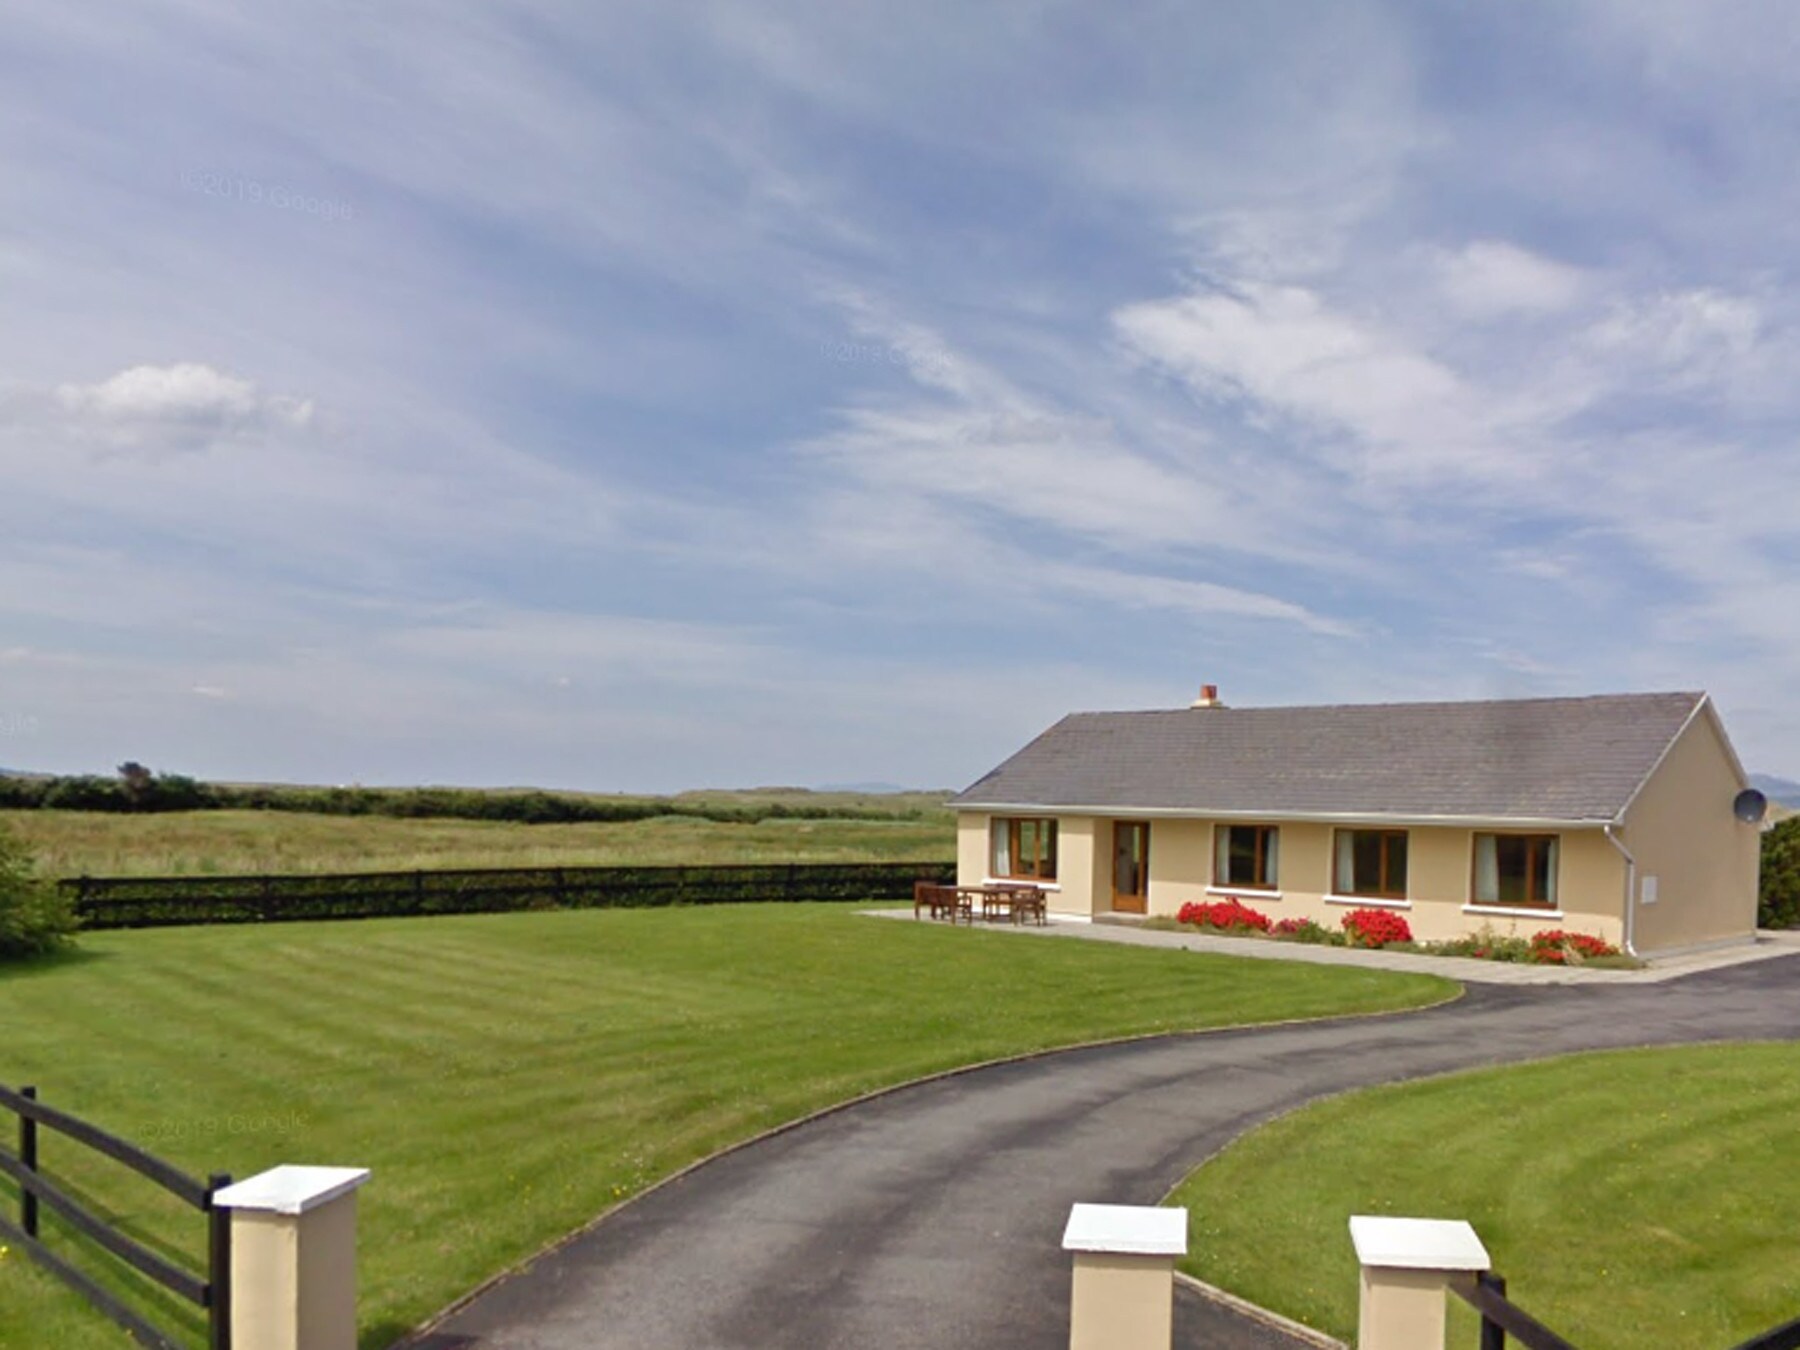 Behy Lodge, Glenbeigh, County Kerry, Ireland

